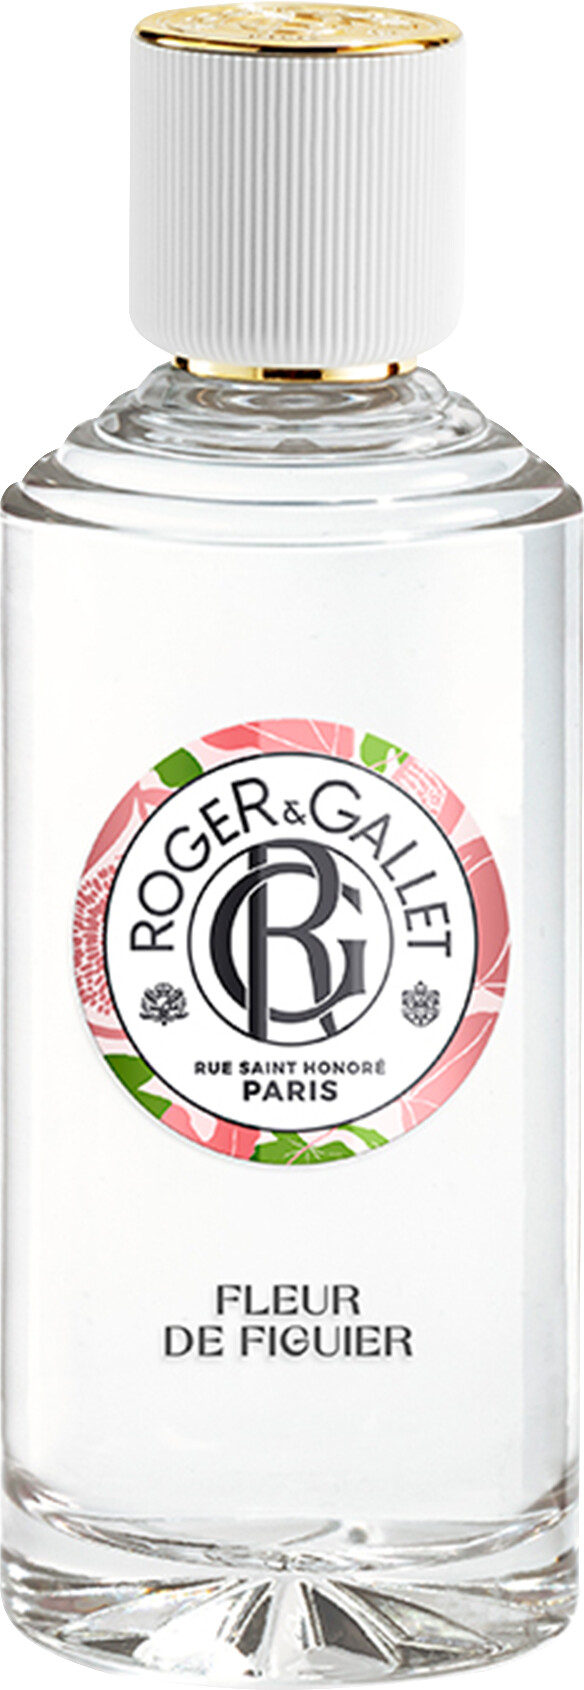 Roger & Gallet Fleur de Figuier Wellbeing Fragrant Water Spray 100ml